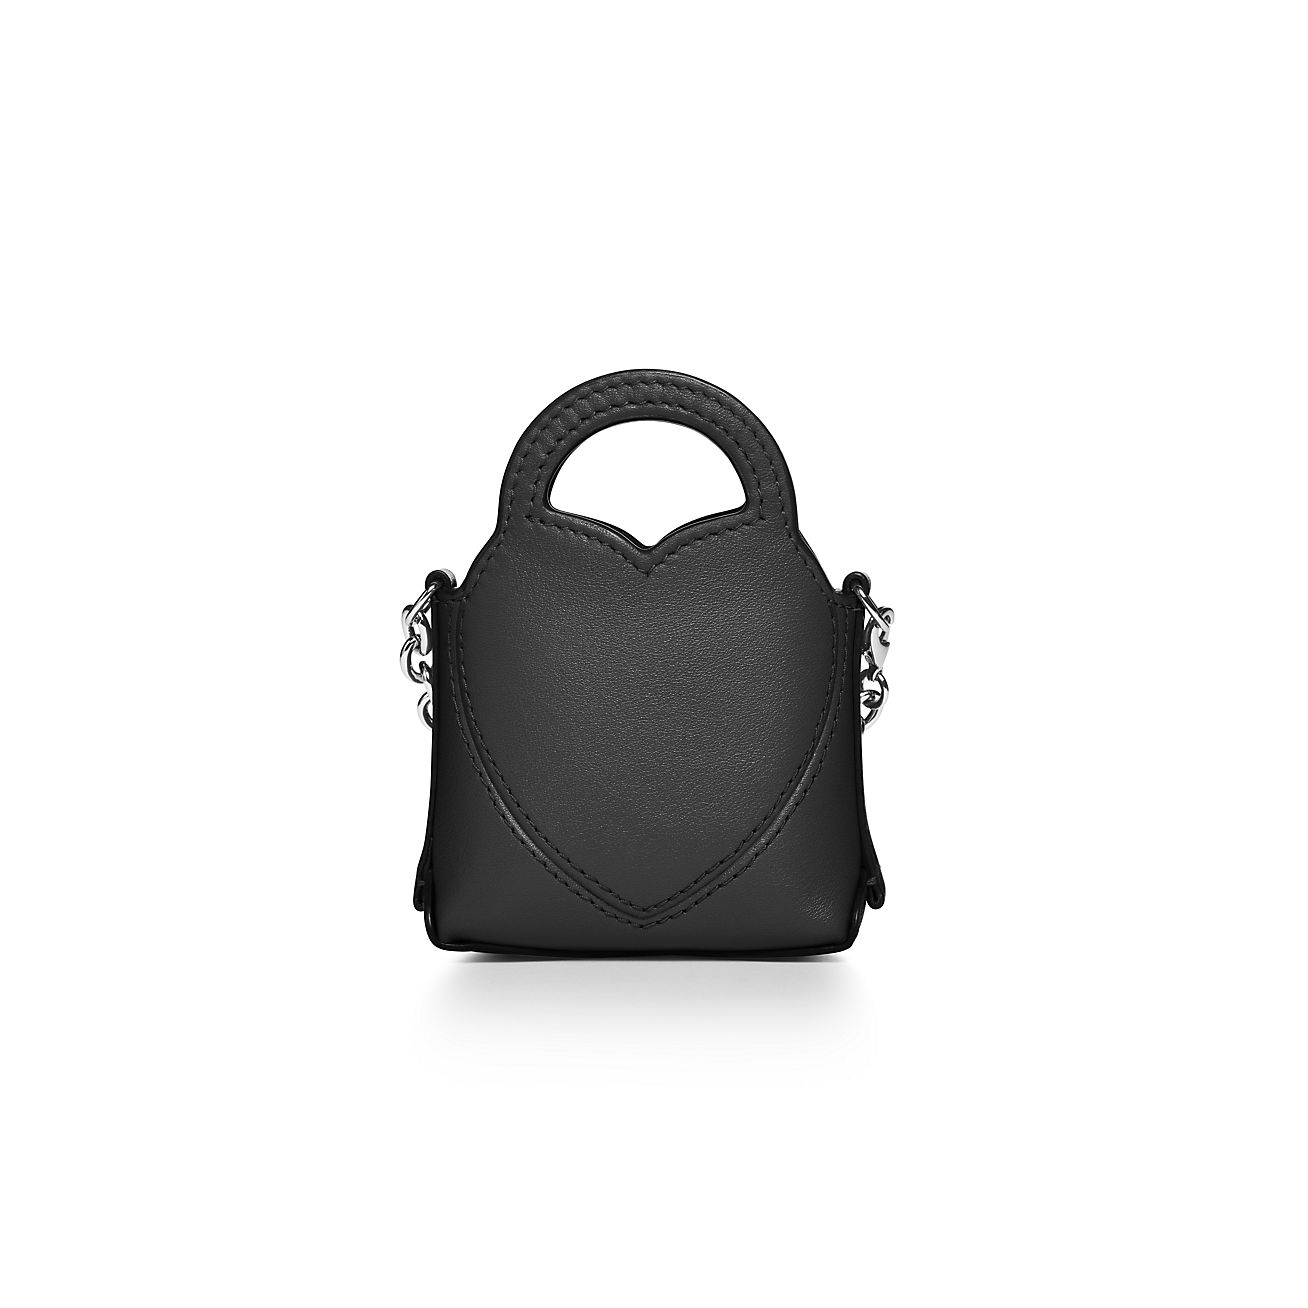 Return to Tiffany™ Nano Bag in Black Leather | Tiffany & Co.